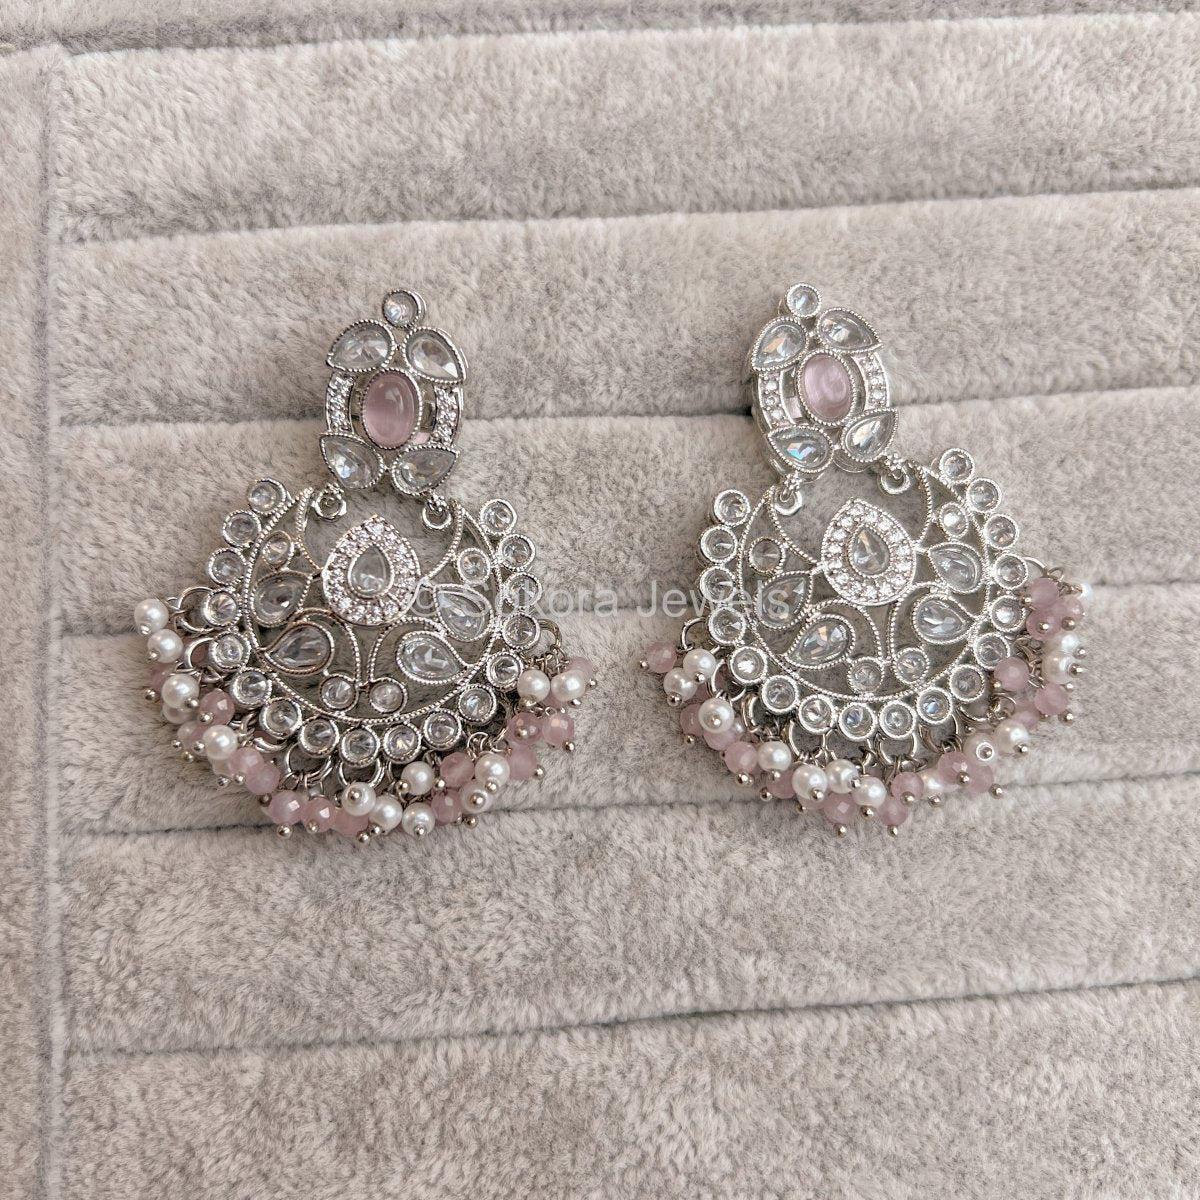 Amreen Small Silver Earrings - Light pink - SOKORA JEWELSAmreen Small Silver Earrings - Light pink